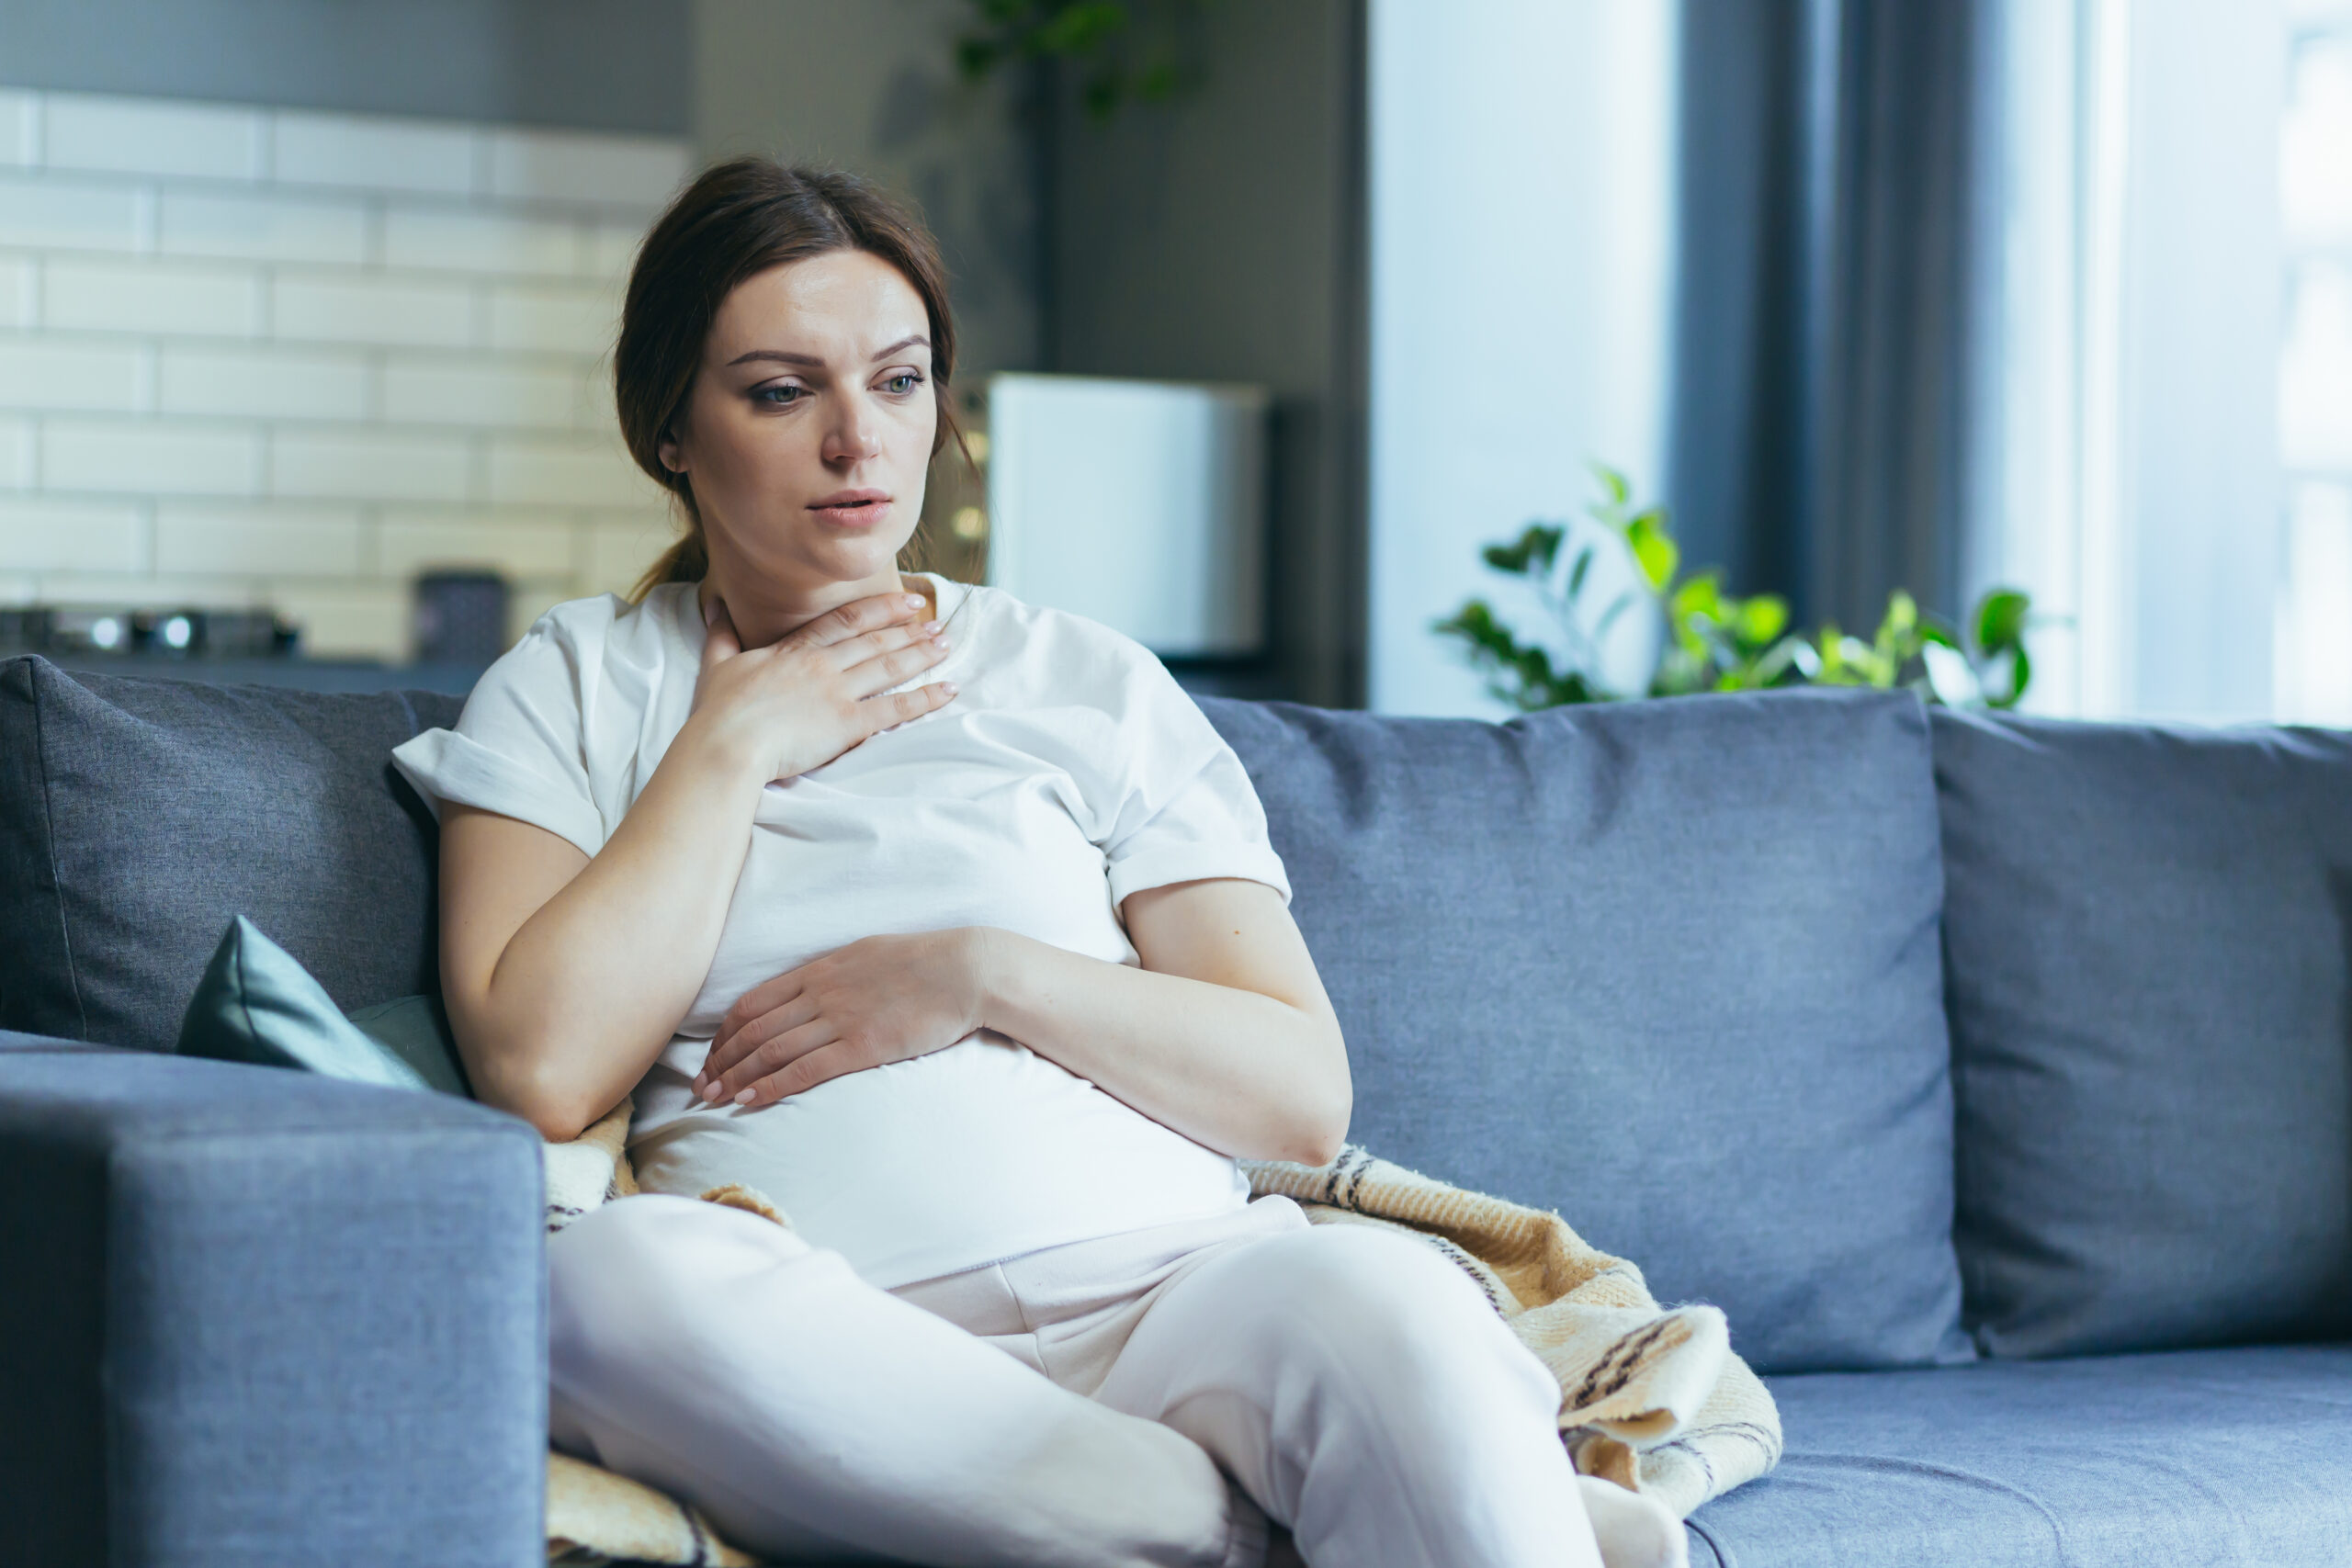 Schwangerschaft Übelkeit Schwangerschaftsübelkeit Abends ab wann was hilft gegen schwangerschaftsübelkeit